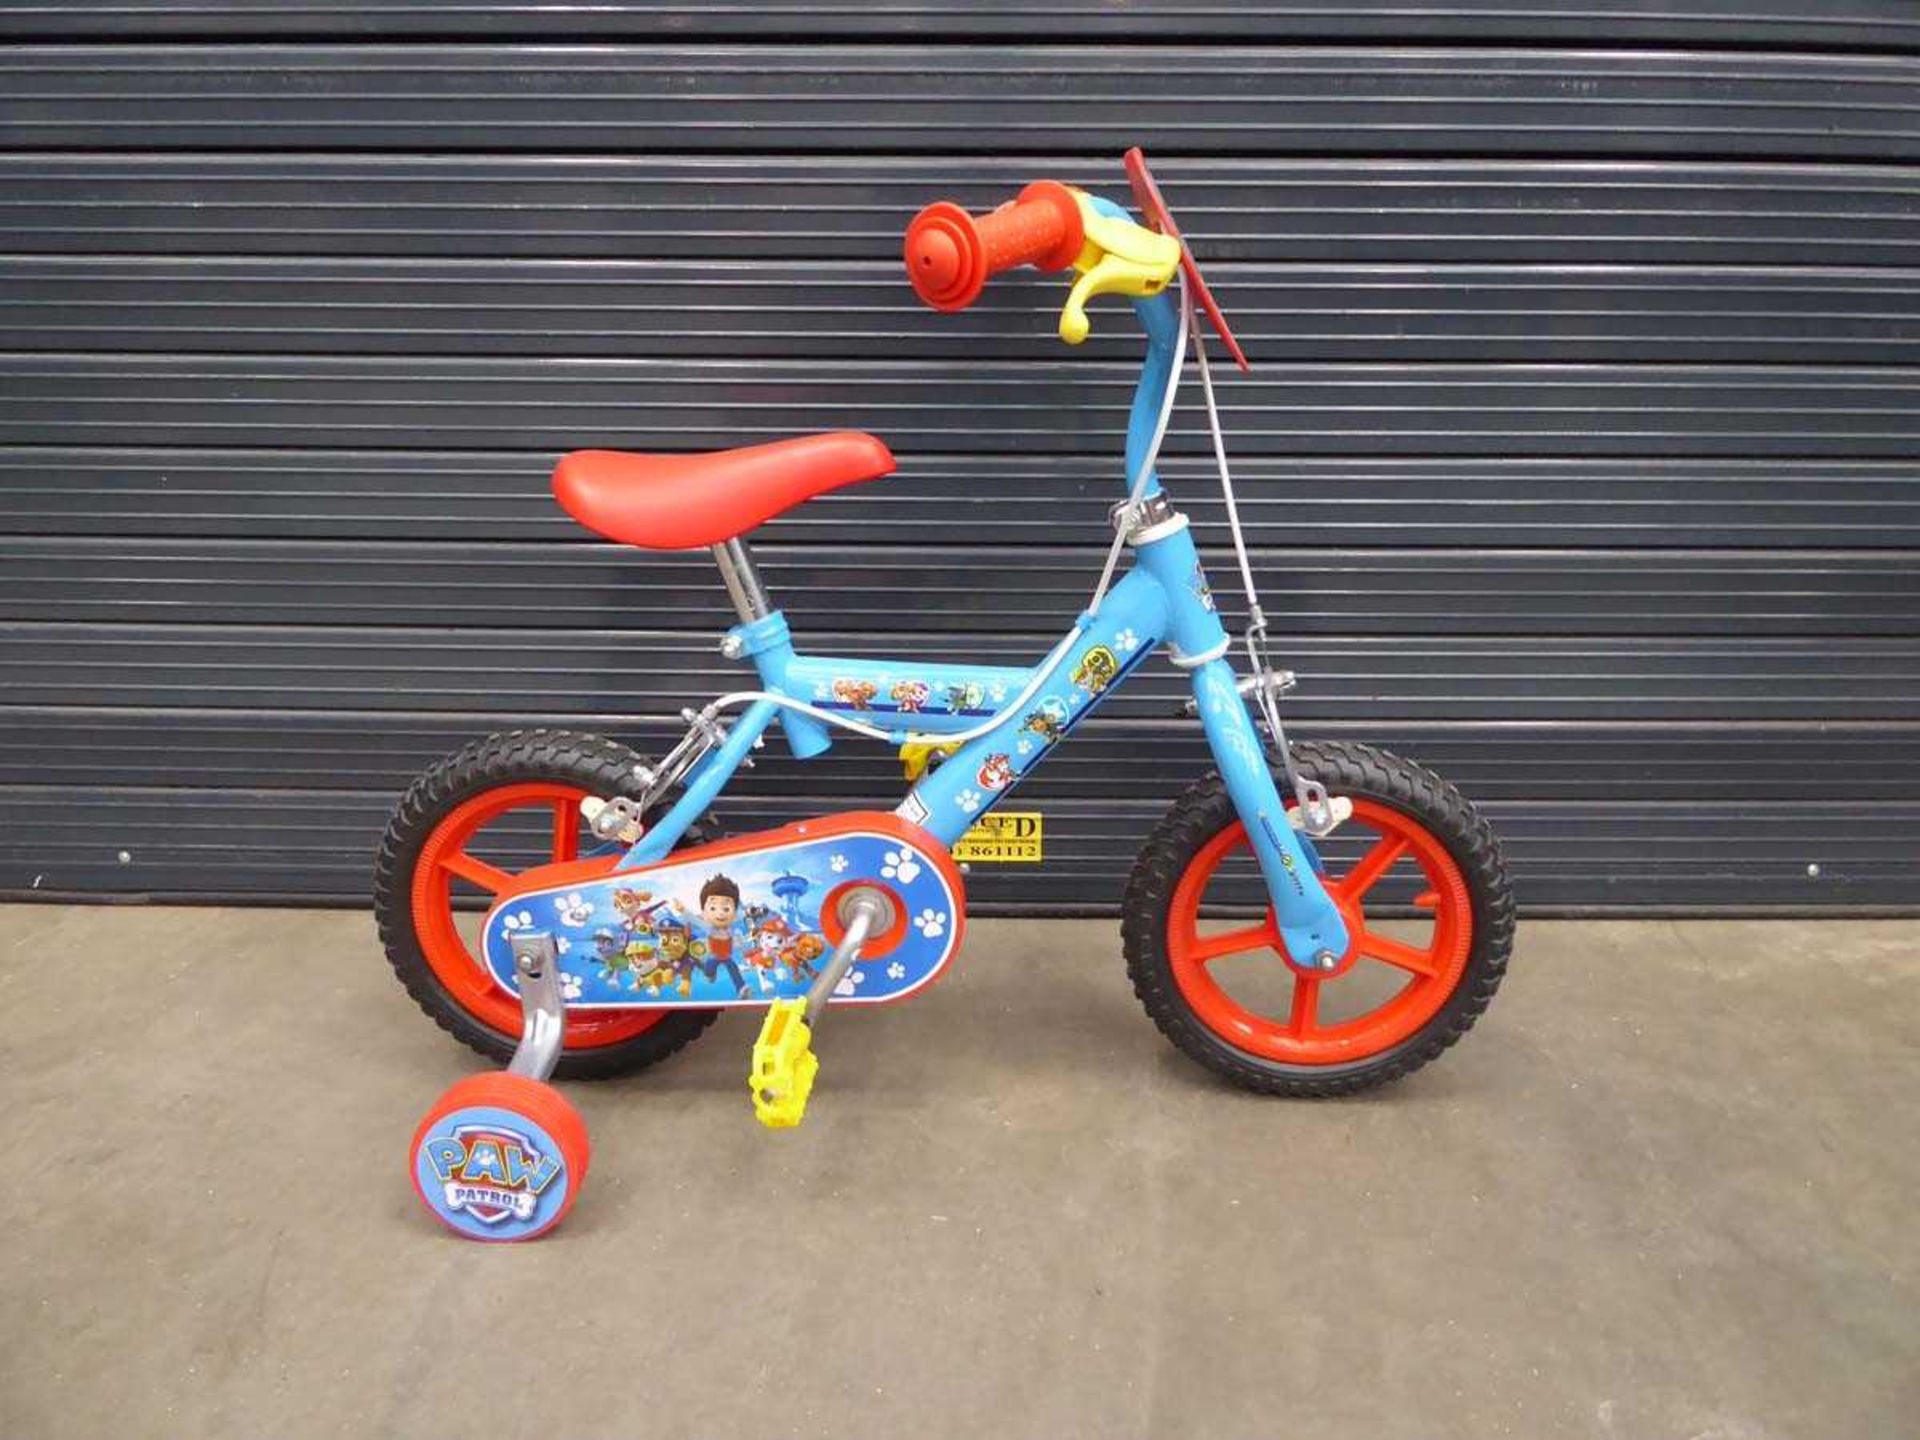 Paw Patrol child's bike with stabilisers